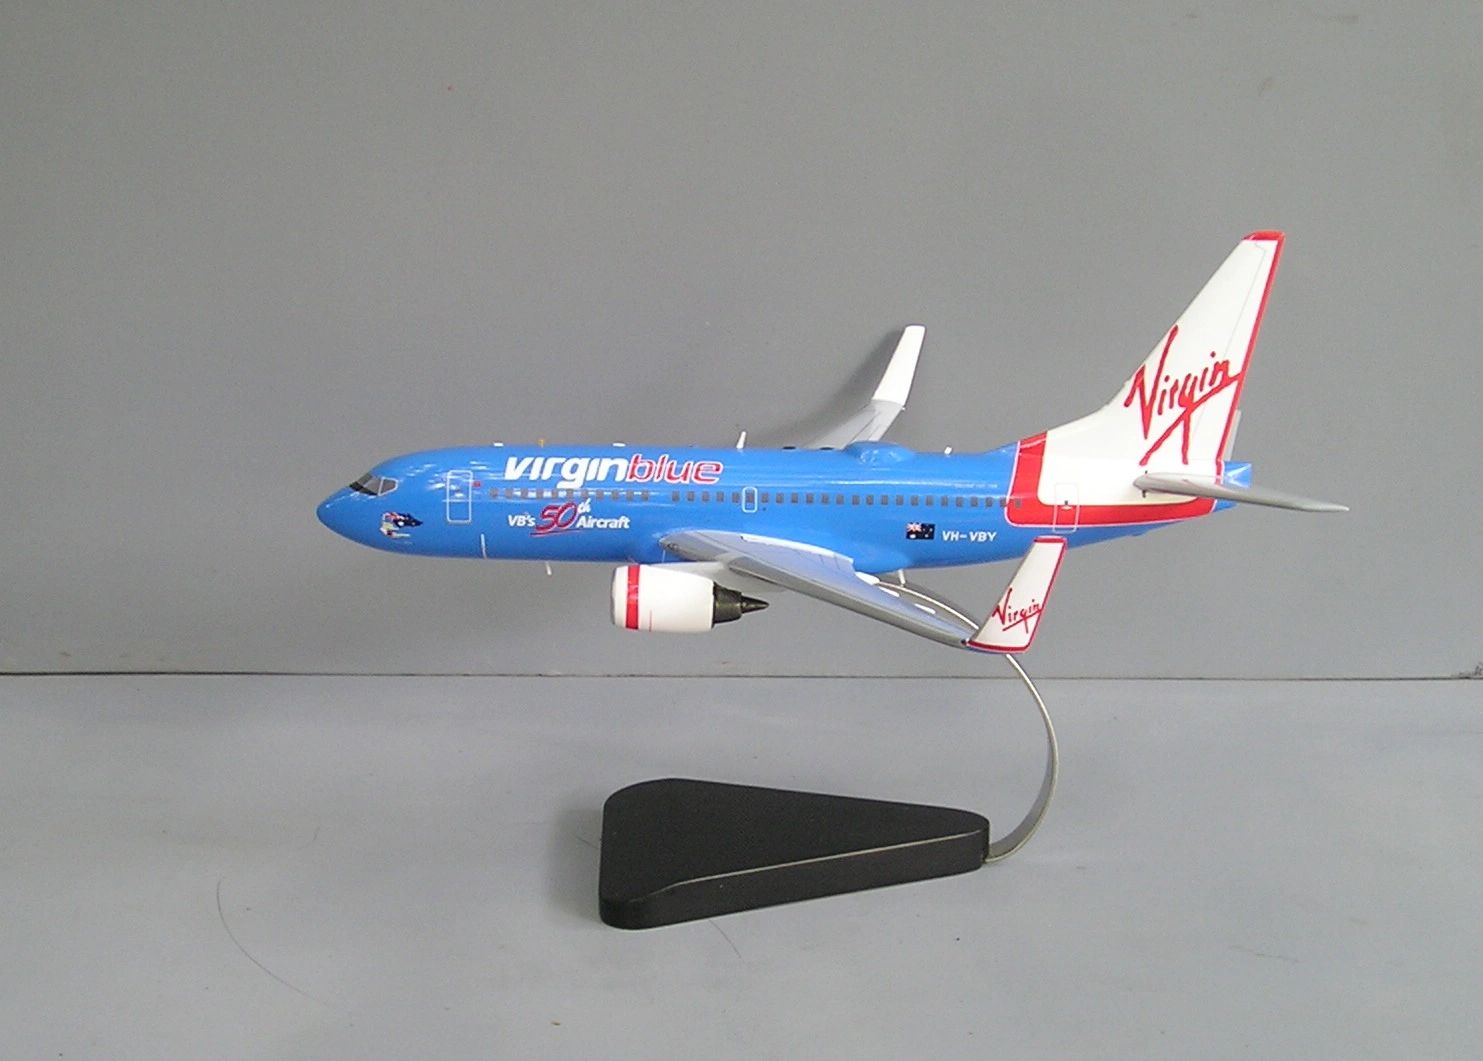 Virgin Blue custom models